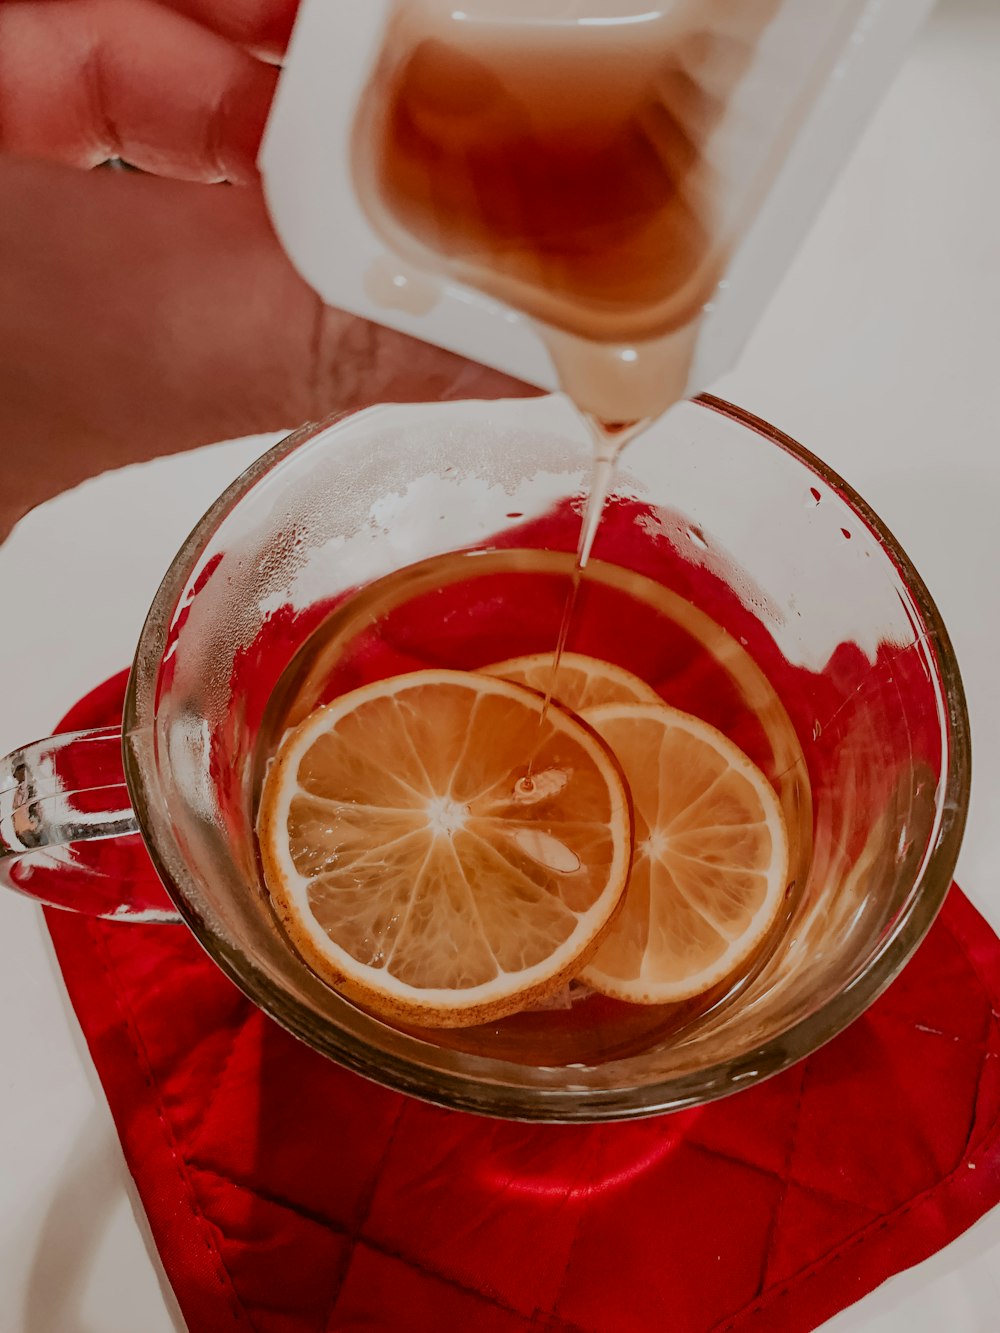 clear glass mug with brown liquid and sliced lemon